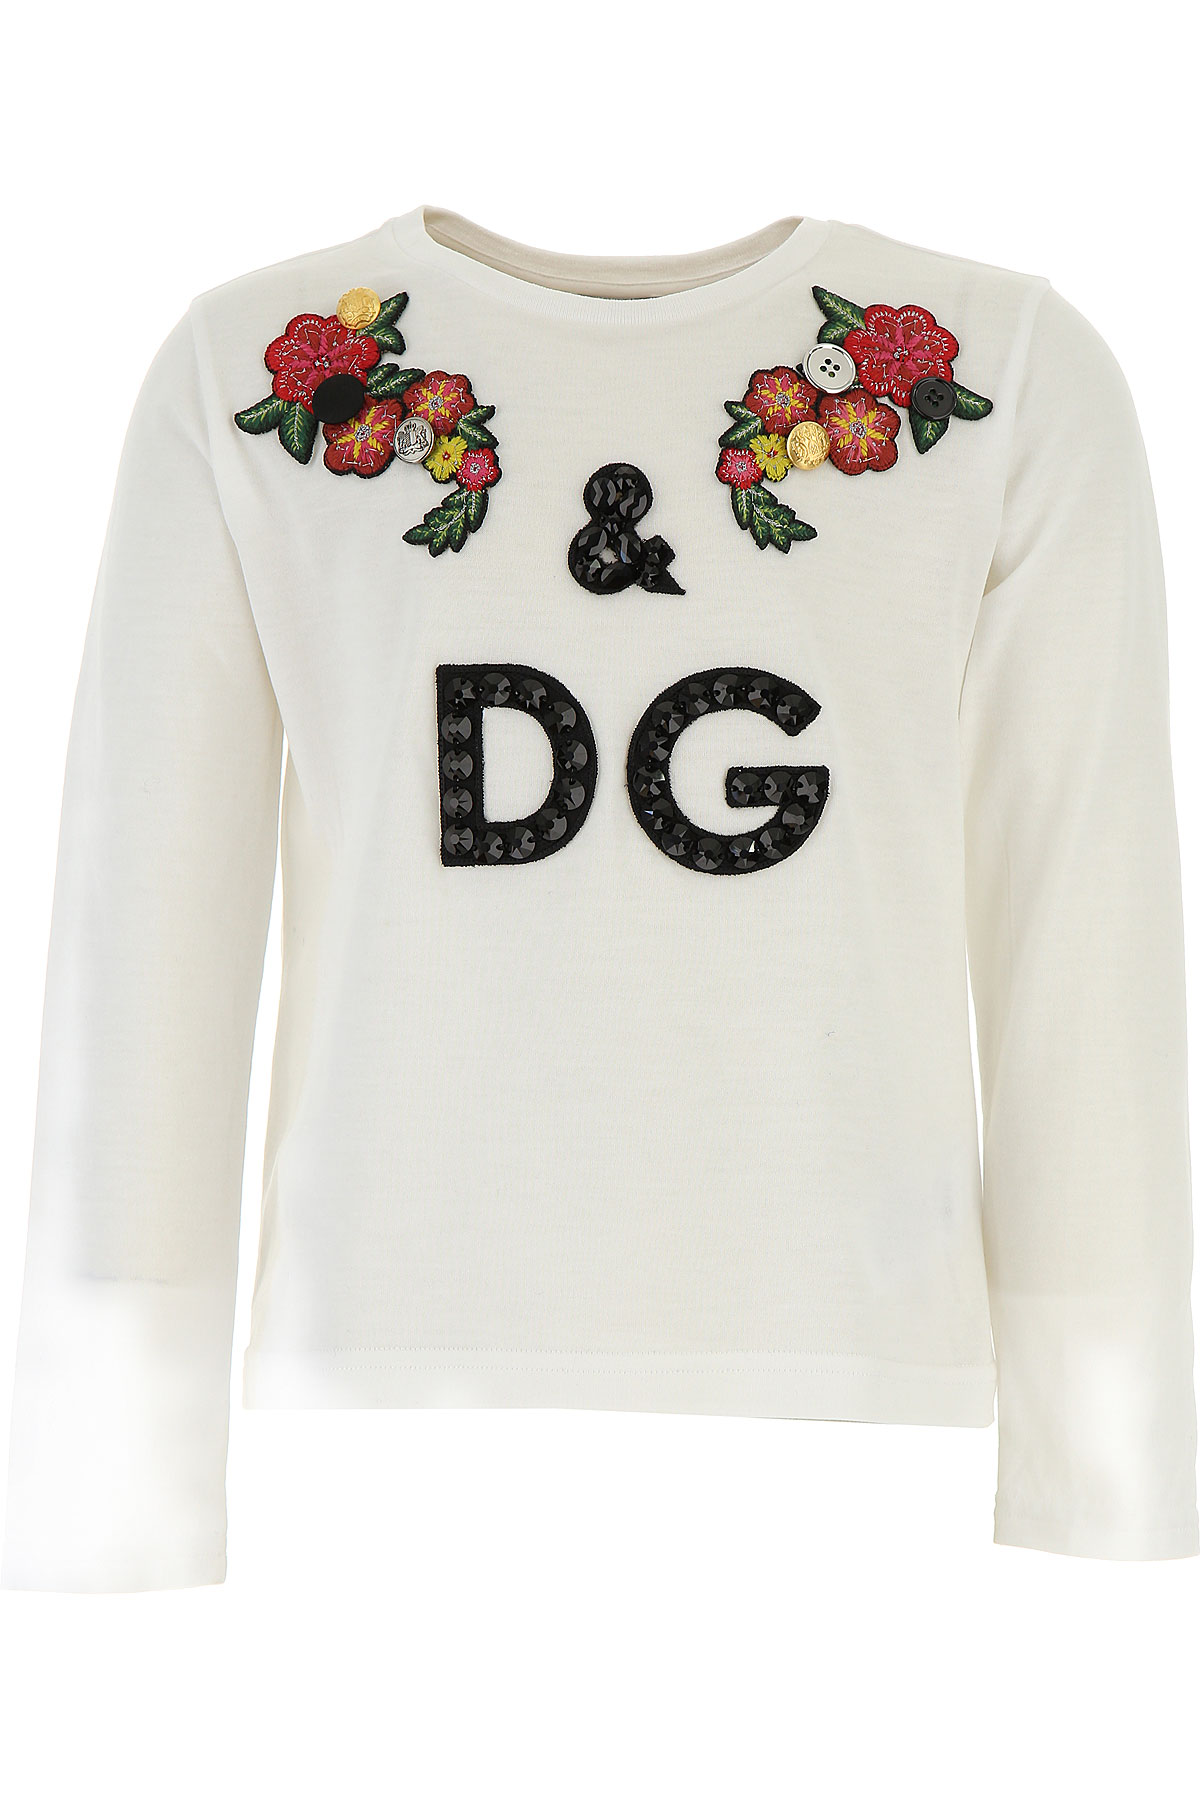 Dolce & Gabbana T-Shirt Enfant pour Fille , Blanc, Coton, 2017, 10Y 12Y 6Y 8Y